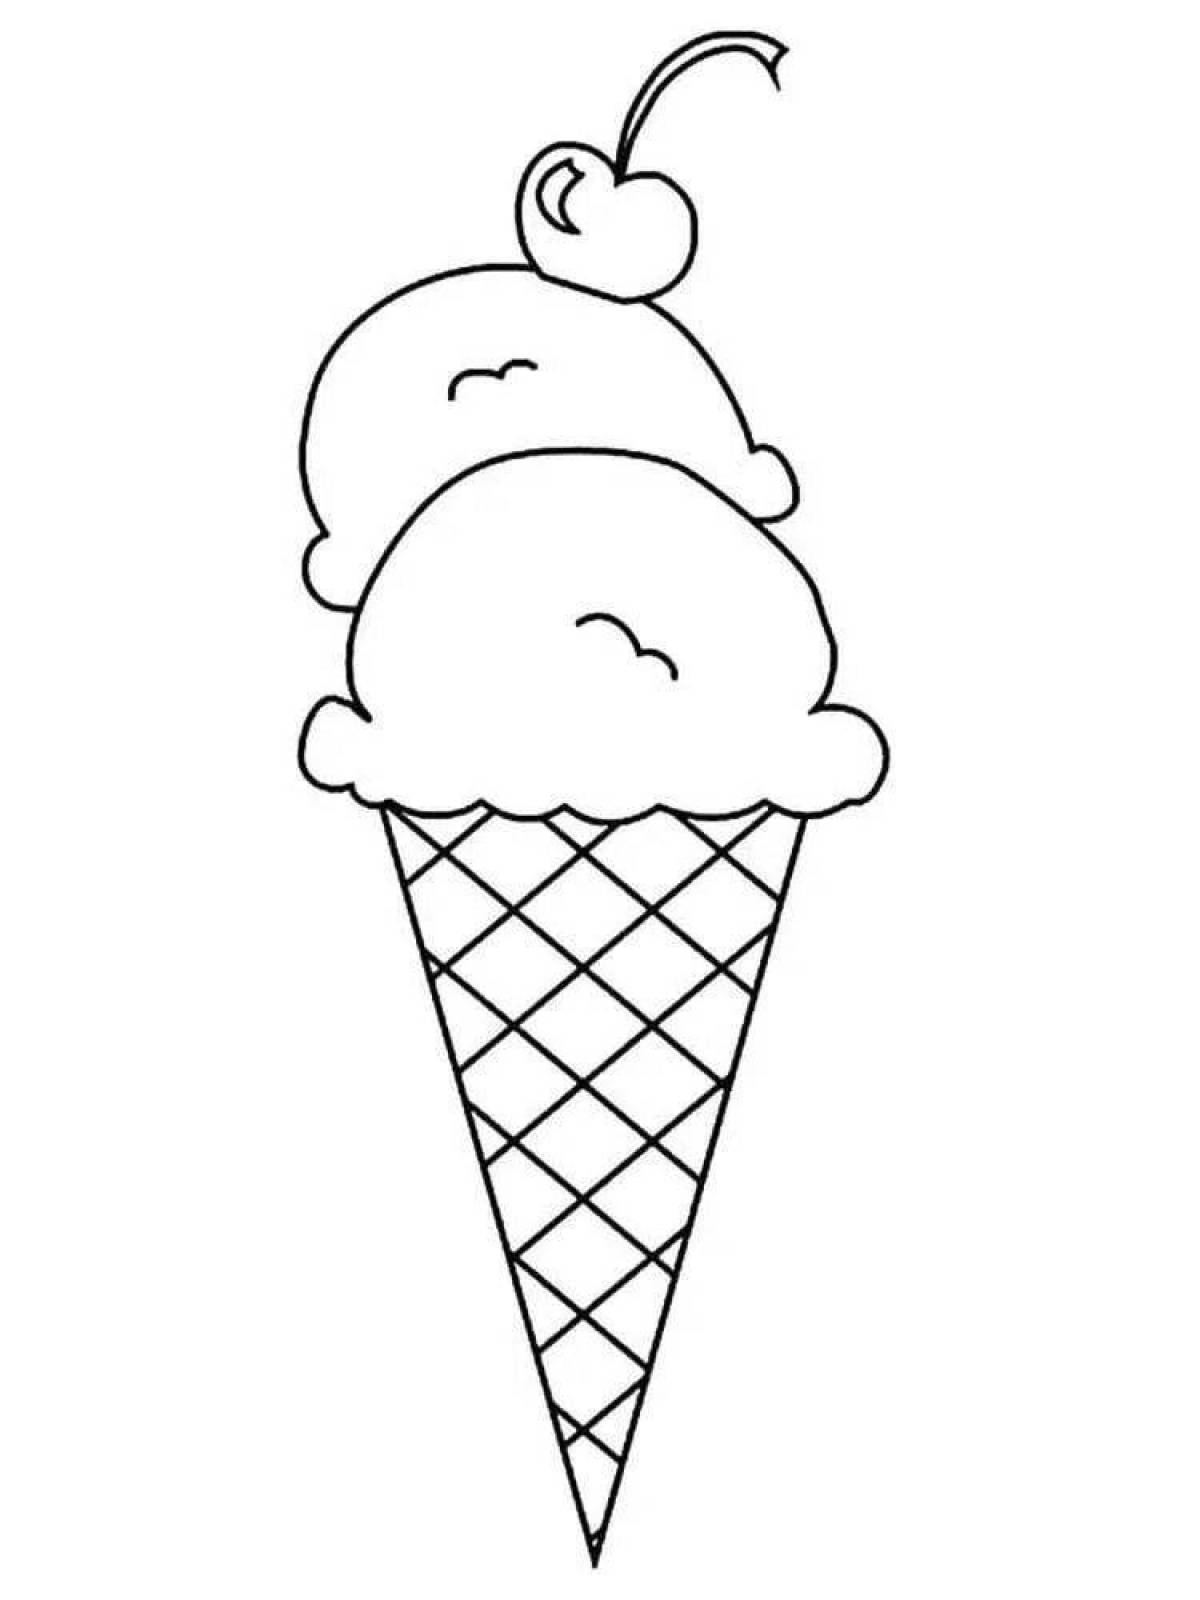 Fancy ice cream drawing